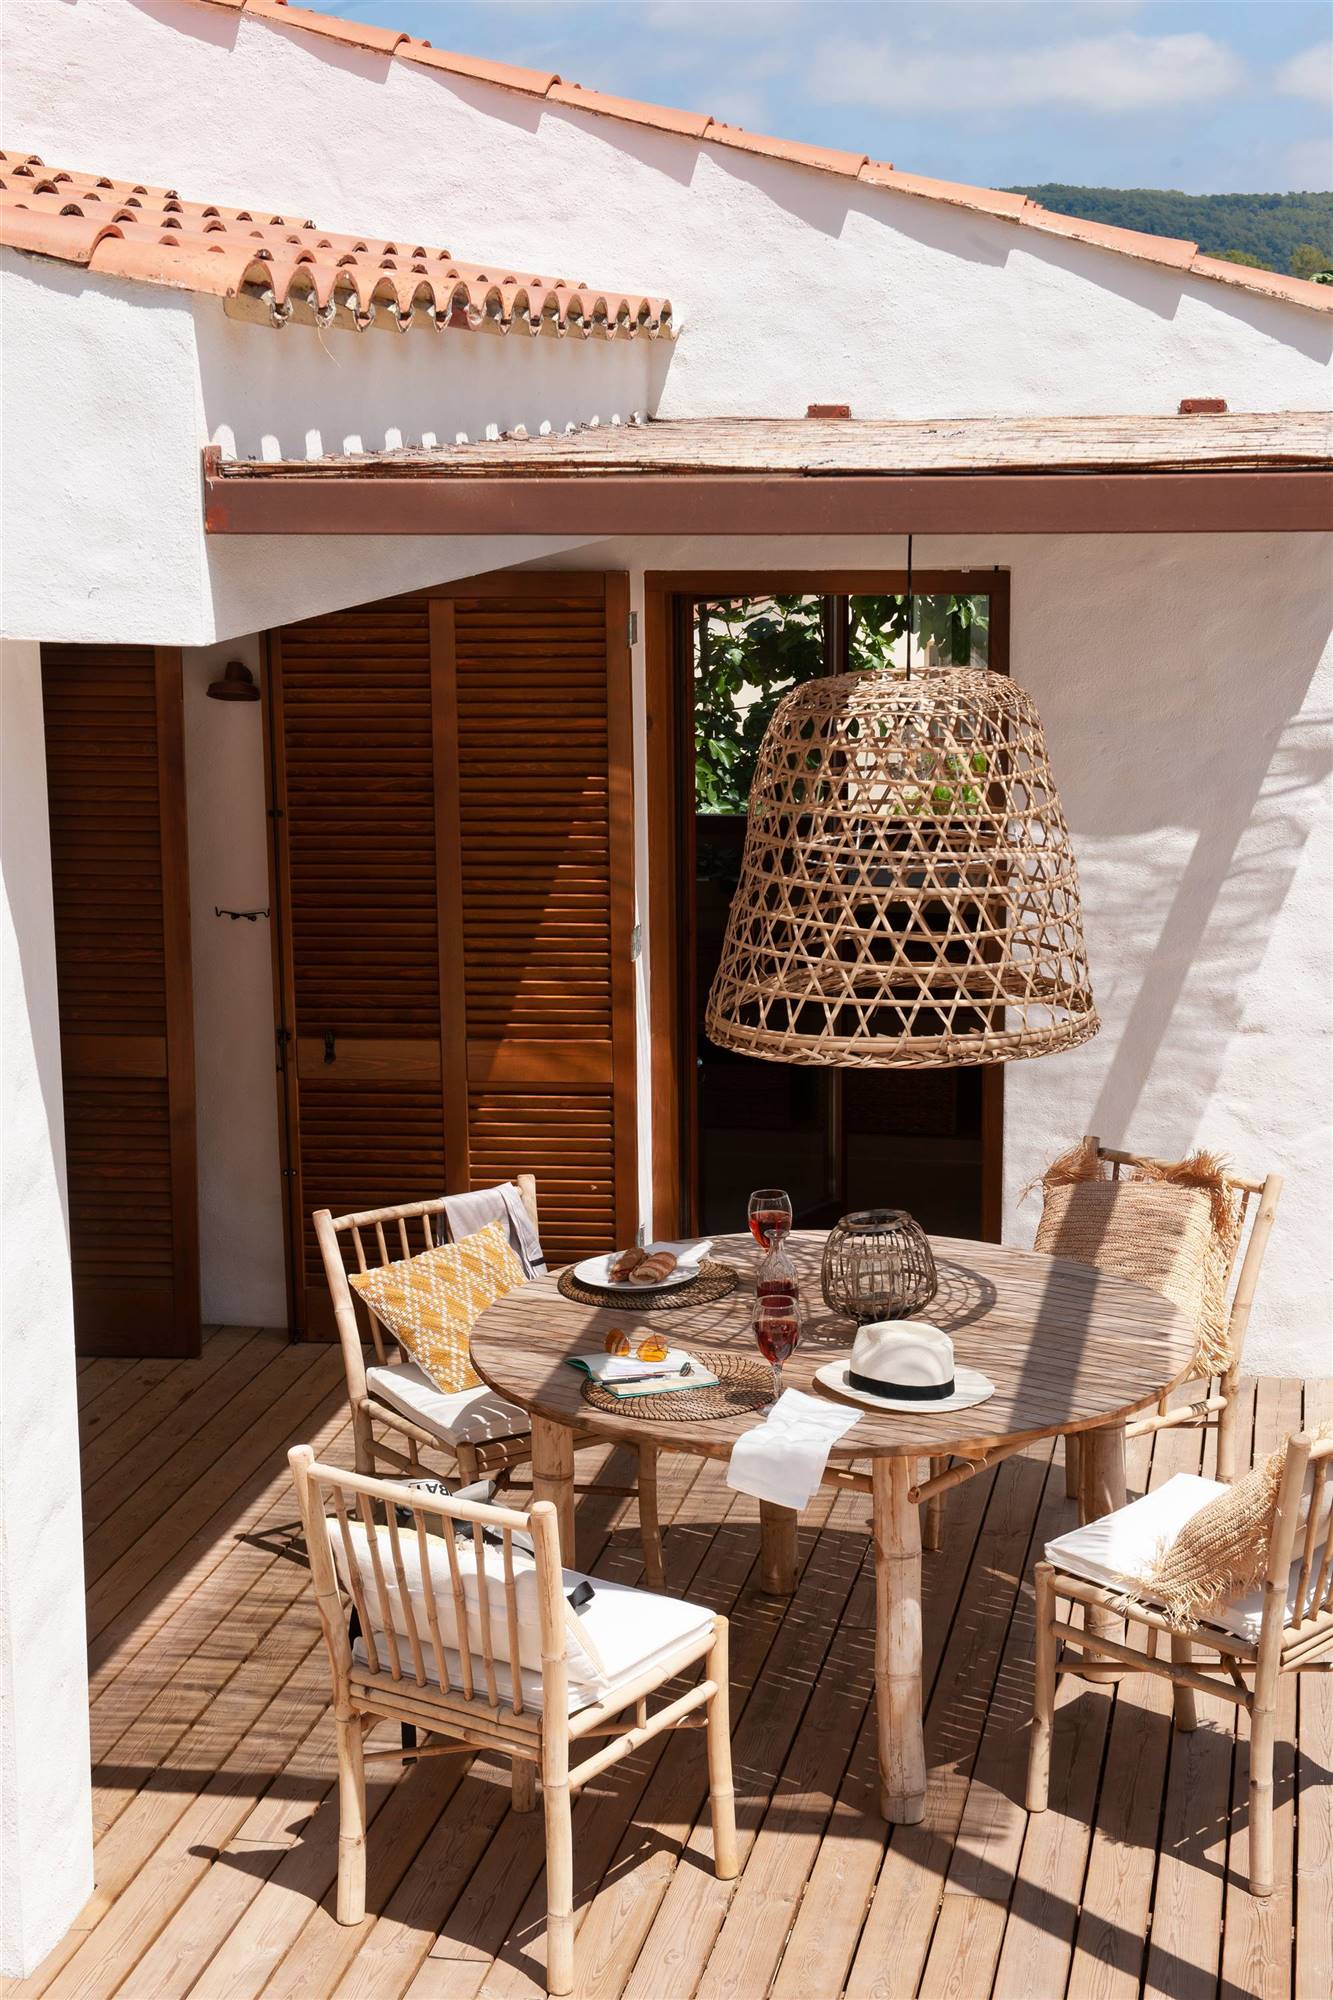 Terraza con comedor exterior con sillas de bambu y lámpara de fibras. 